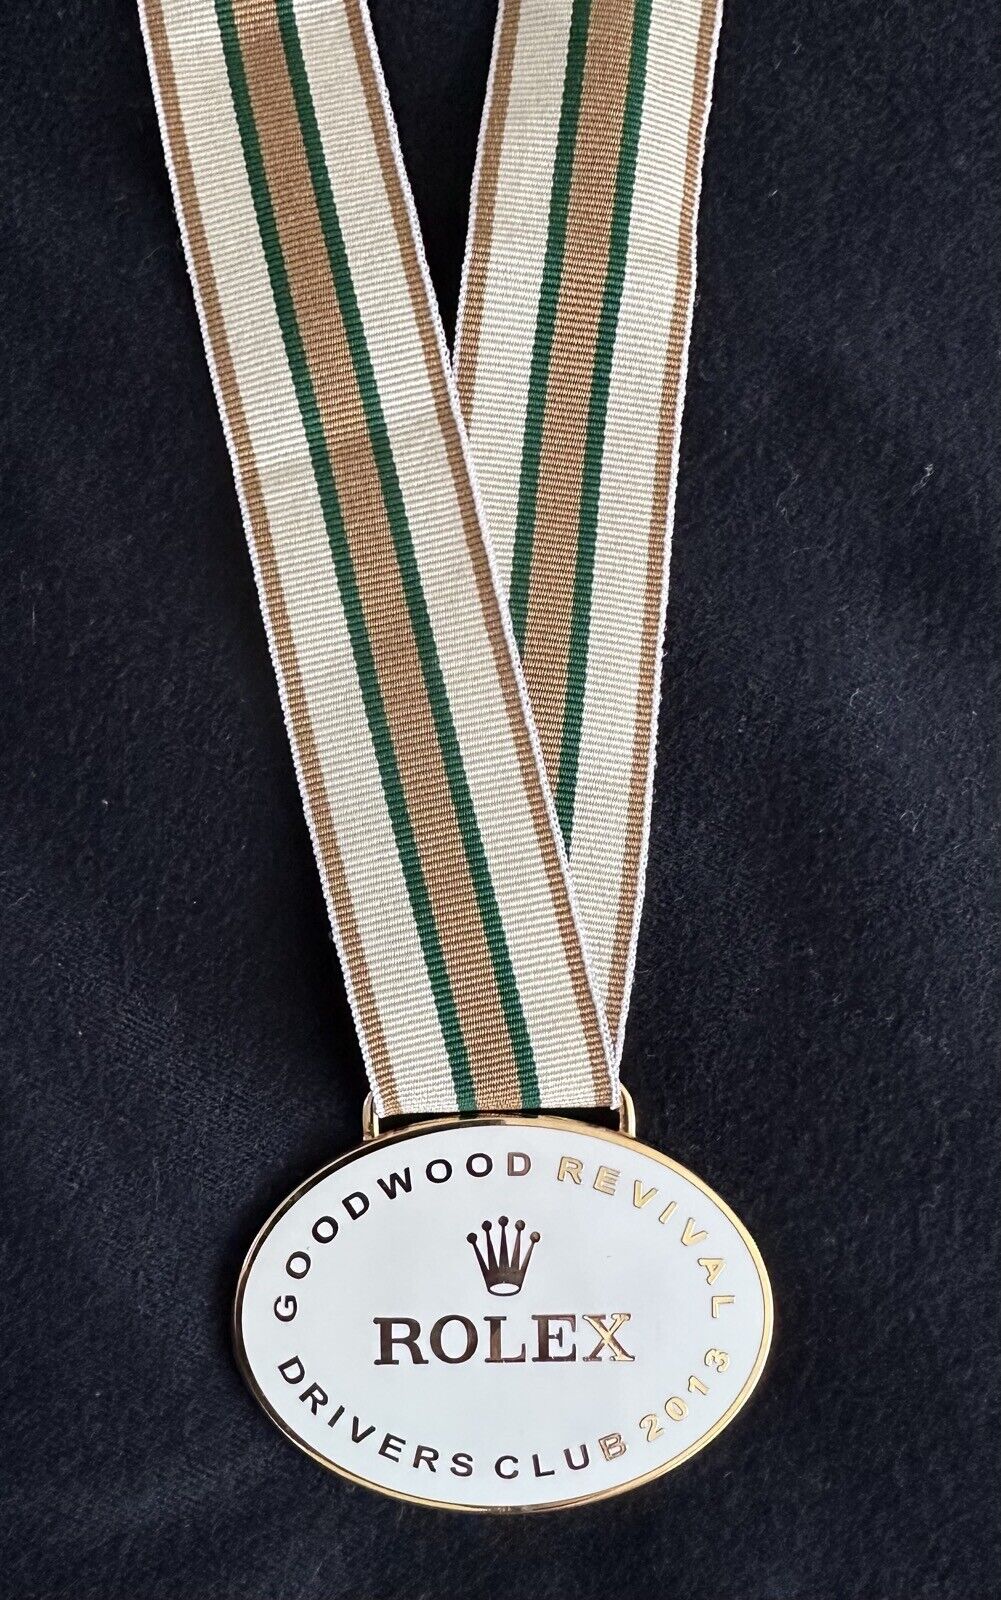 Rolex 2013 Goodwood Revival Drivers Club Medallion Badge